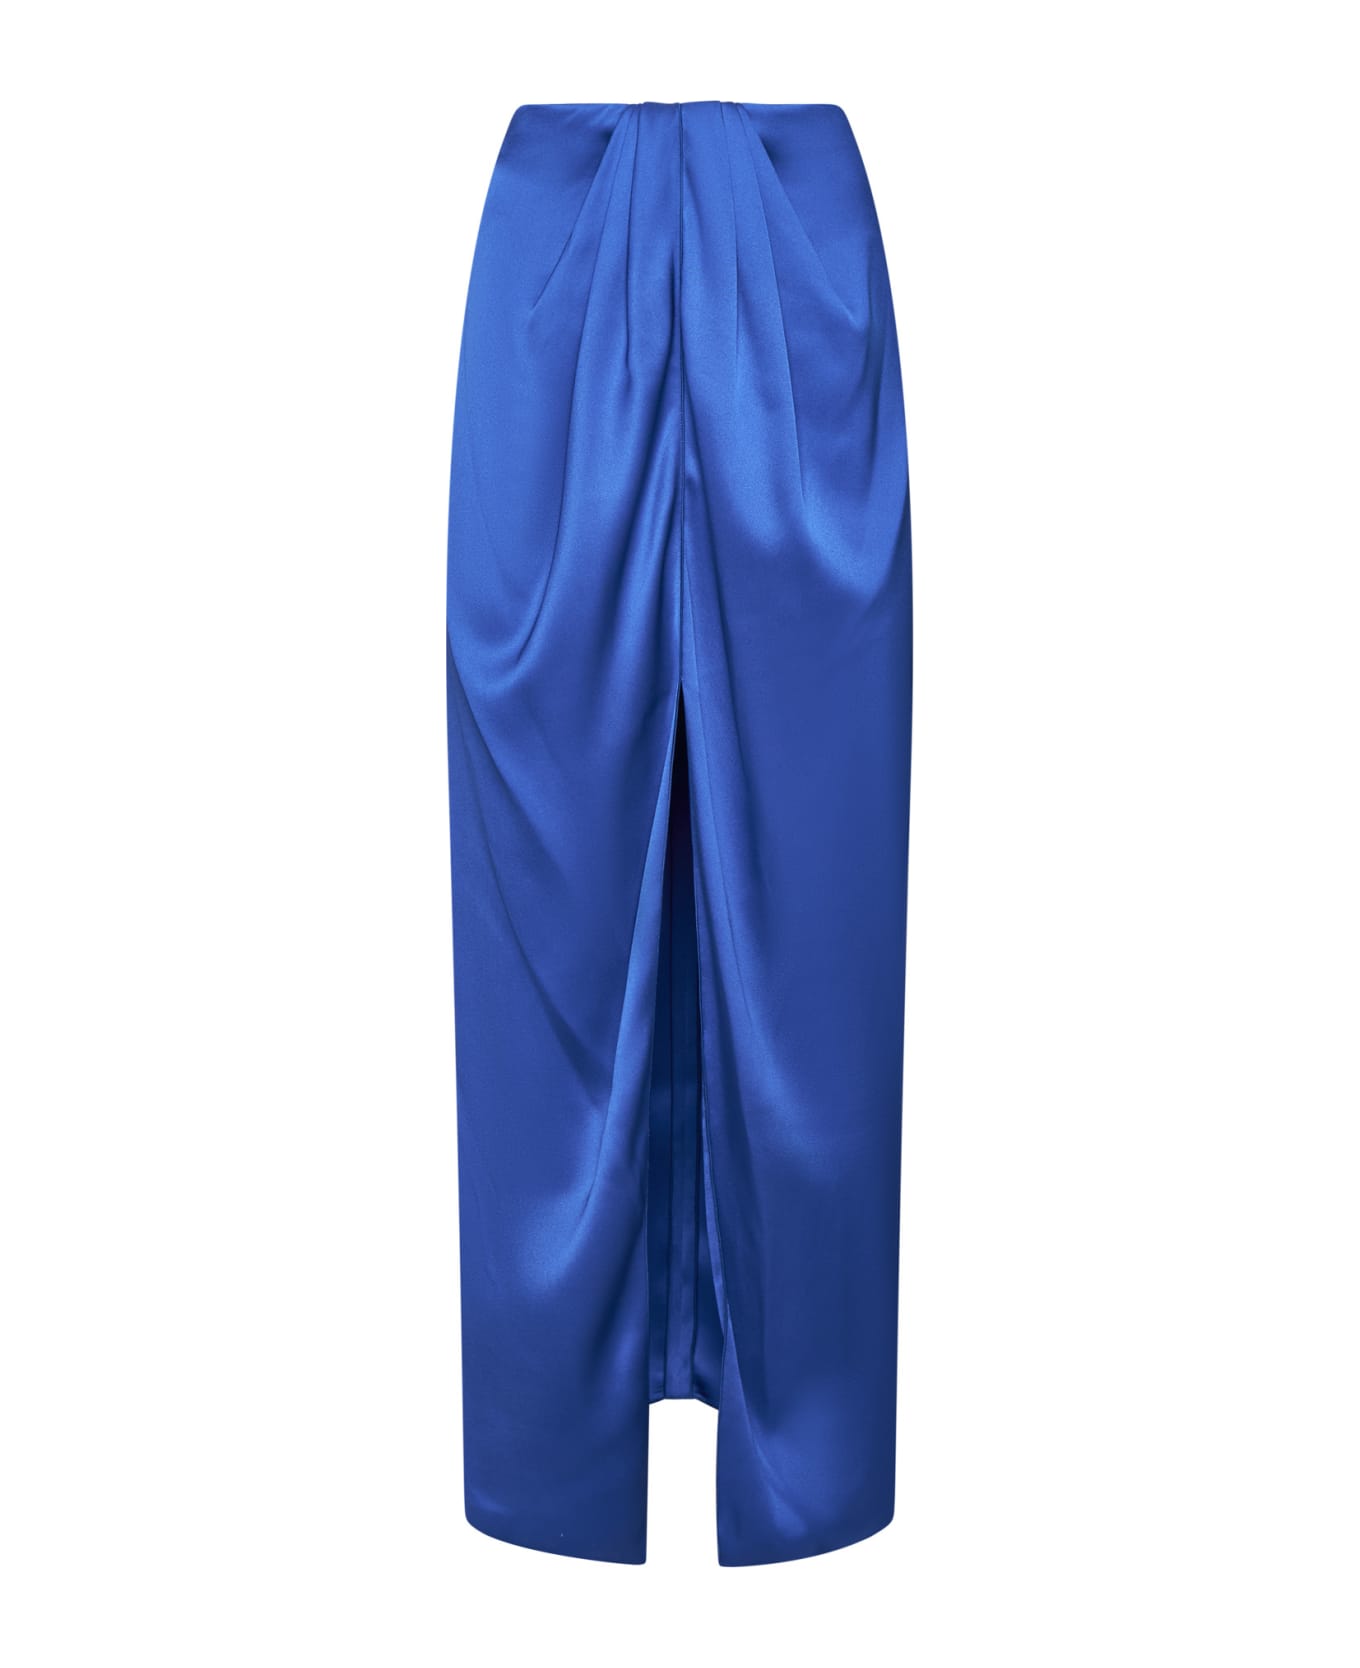 Giorgio Armani Skirt - Mazarine blue